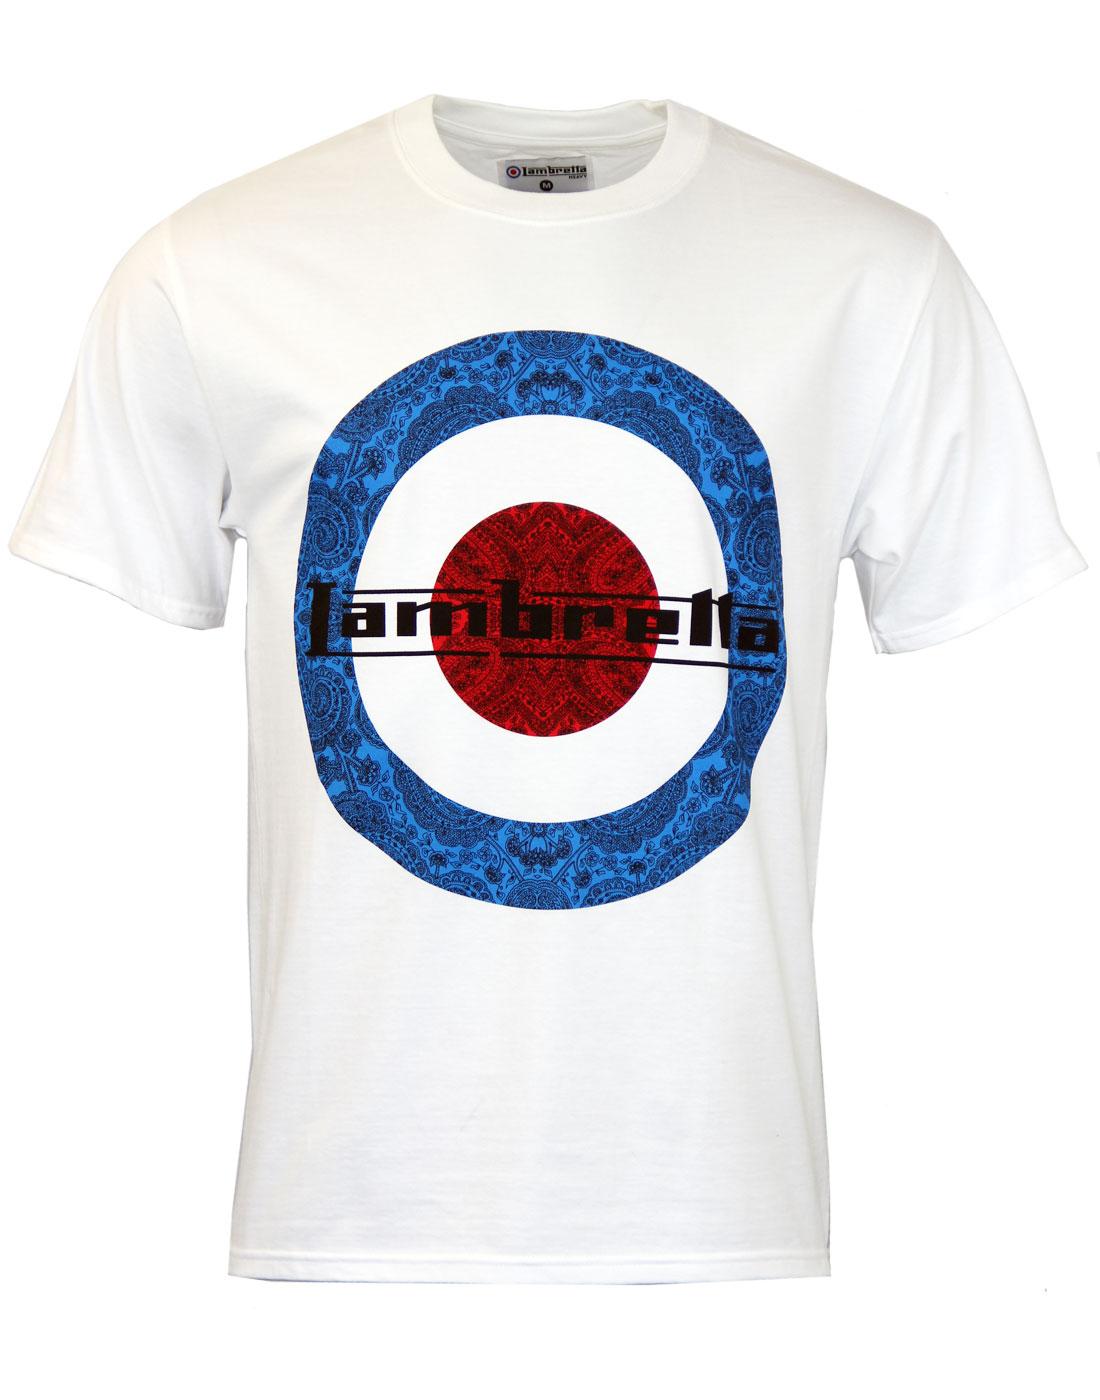 Paisley LAMBRETTA Retro 60s Mod Target T-Shirt